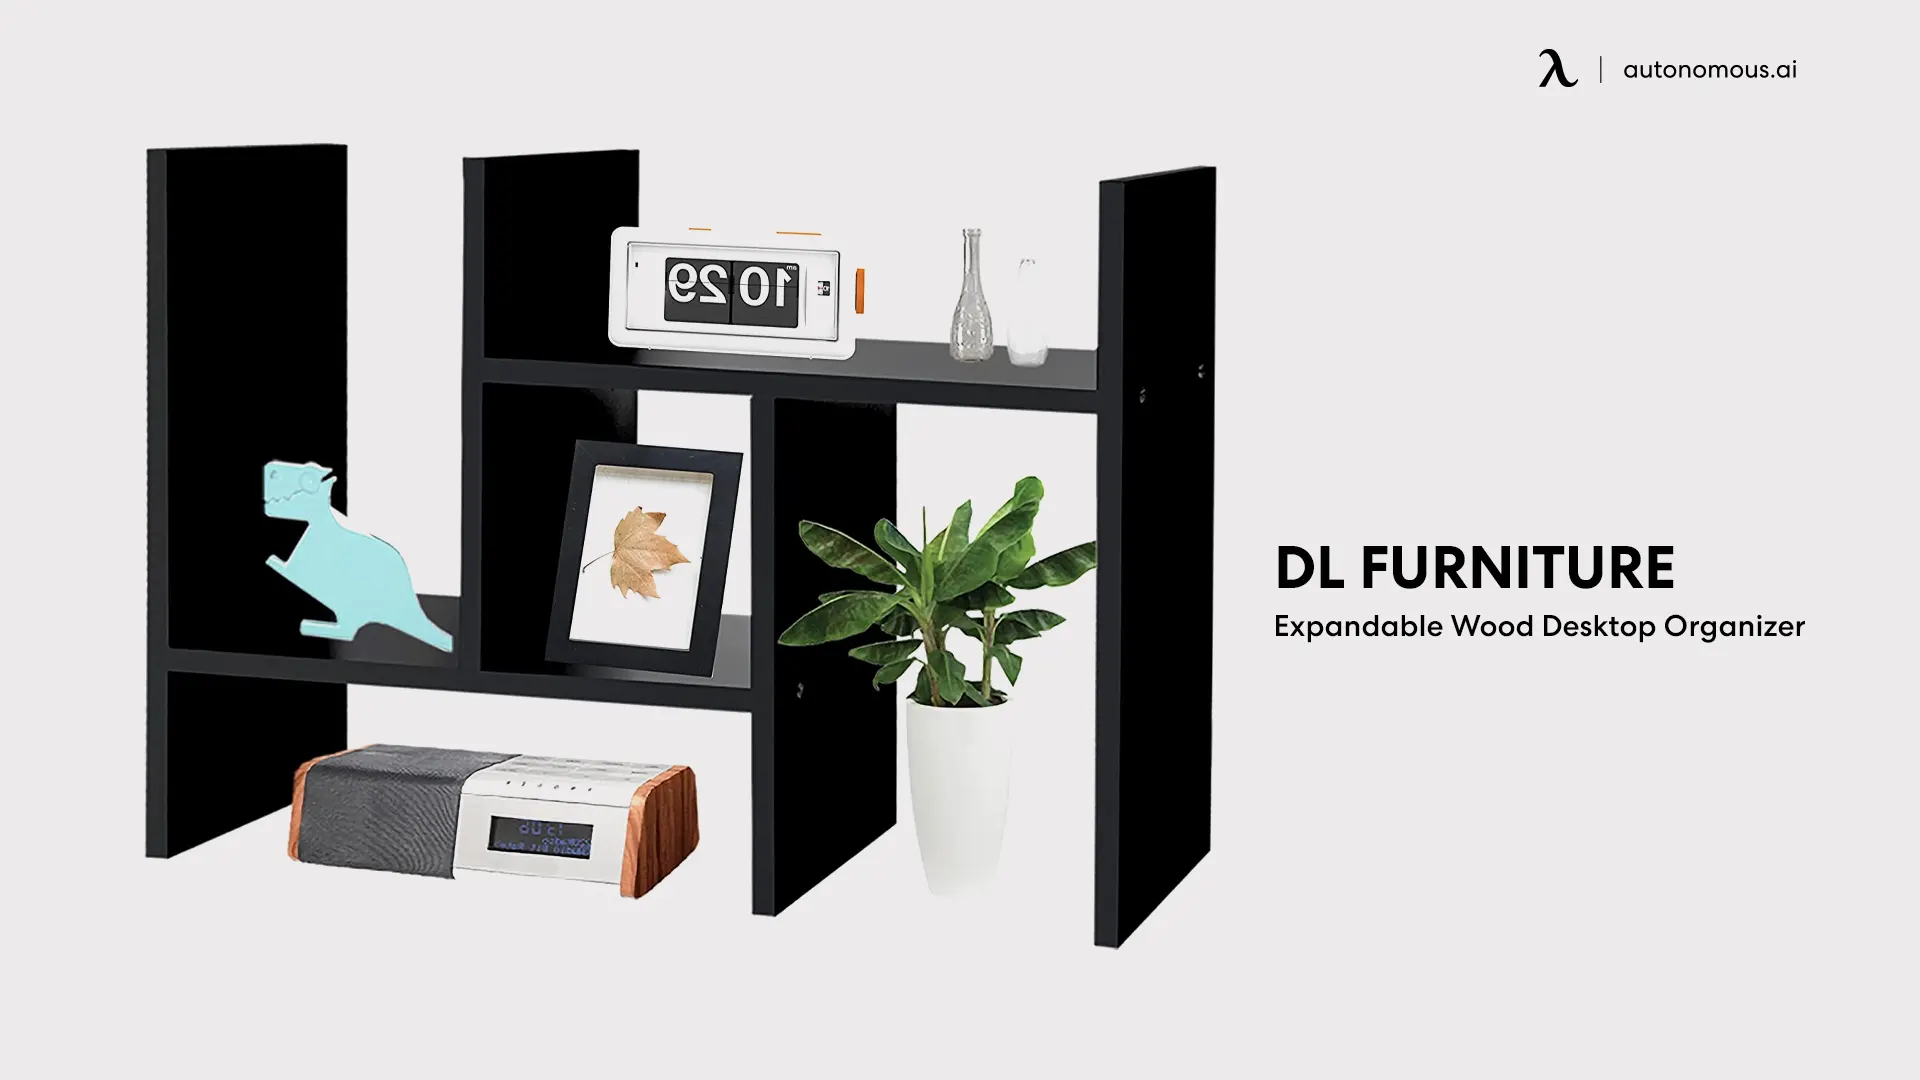 DL Furniture Expandable Storage Organizer